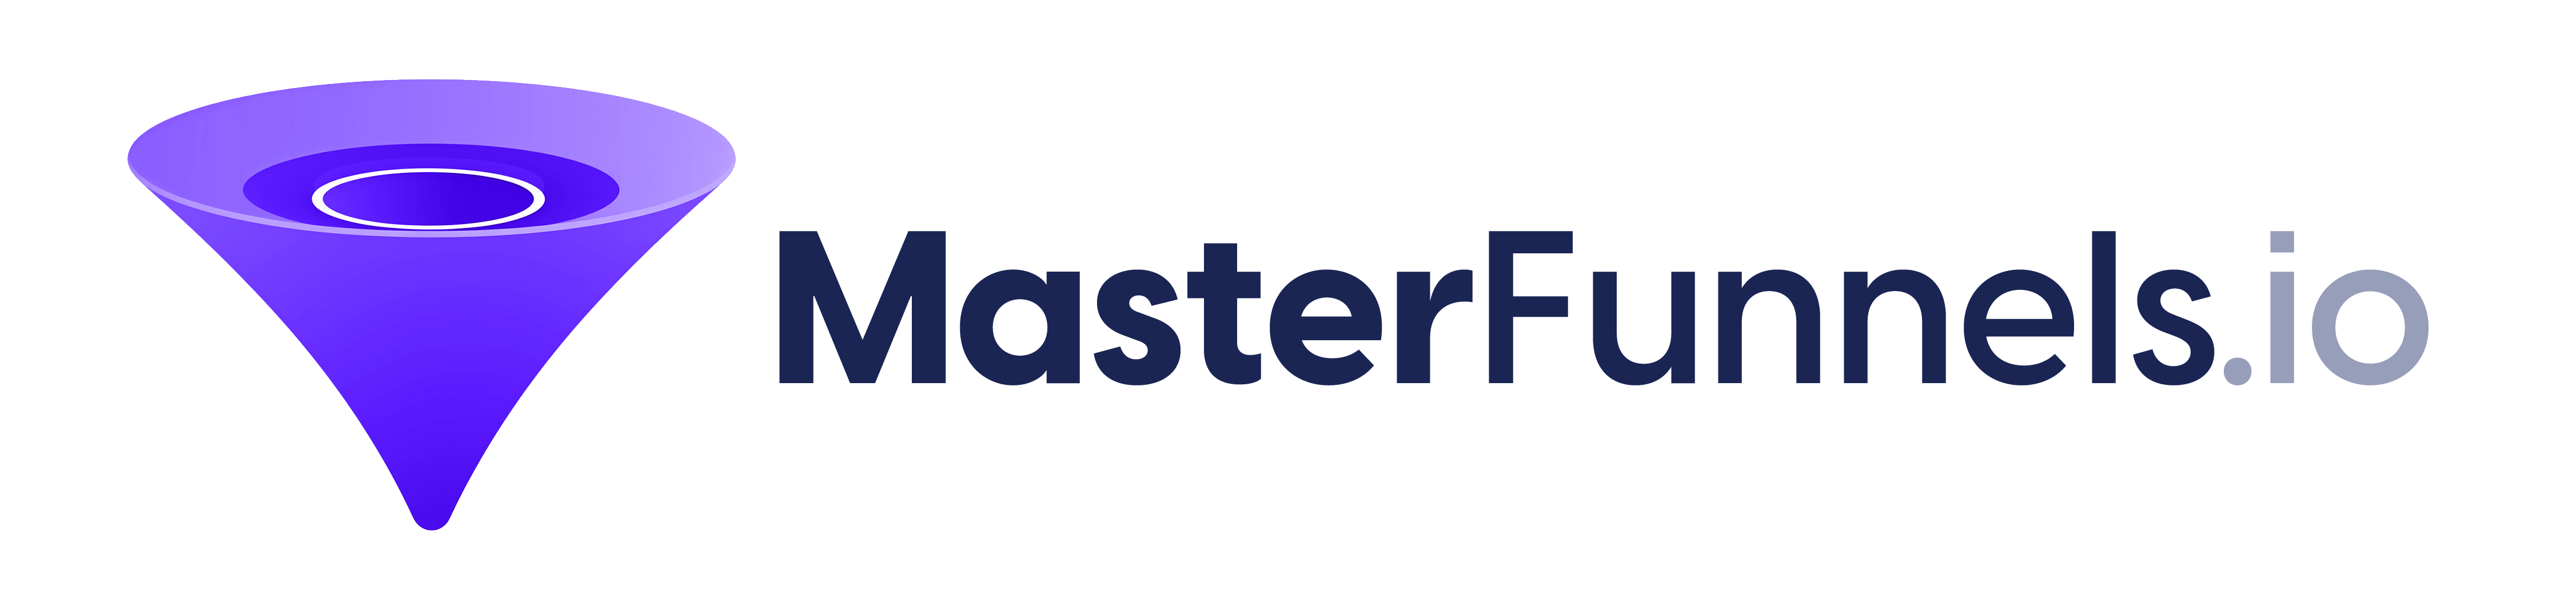 MasterFunnels Logo